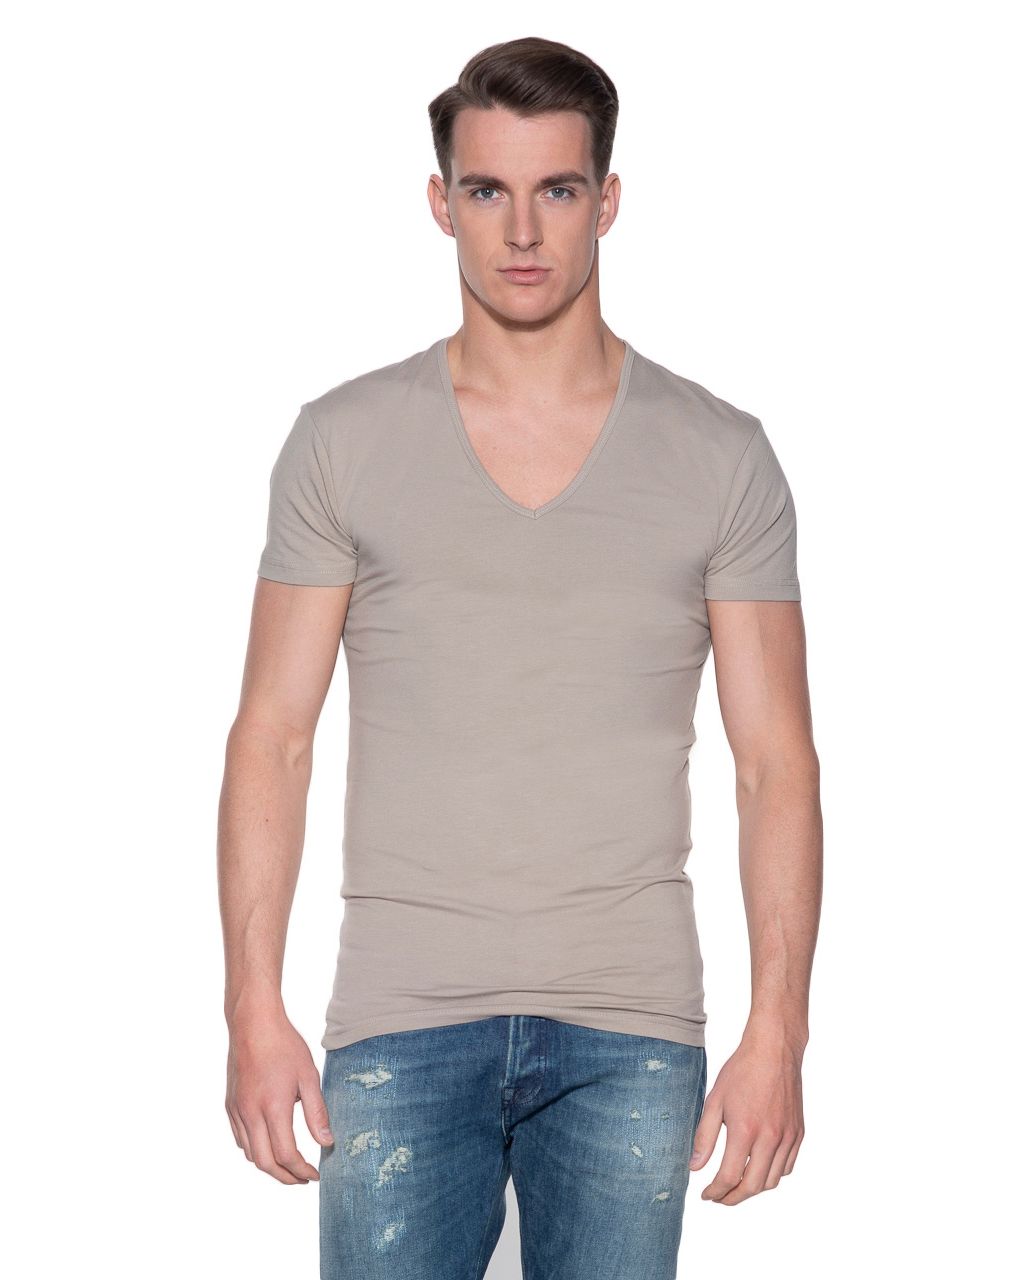 Slater Stretch T-shirt Diepe 2-pack | Shop nu - Only for Men